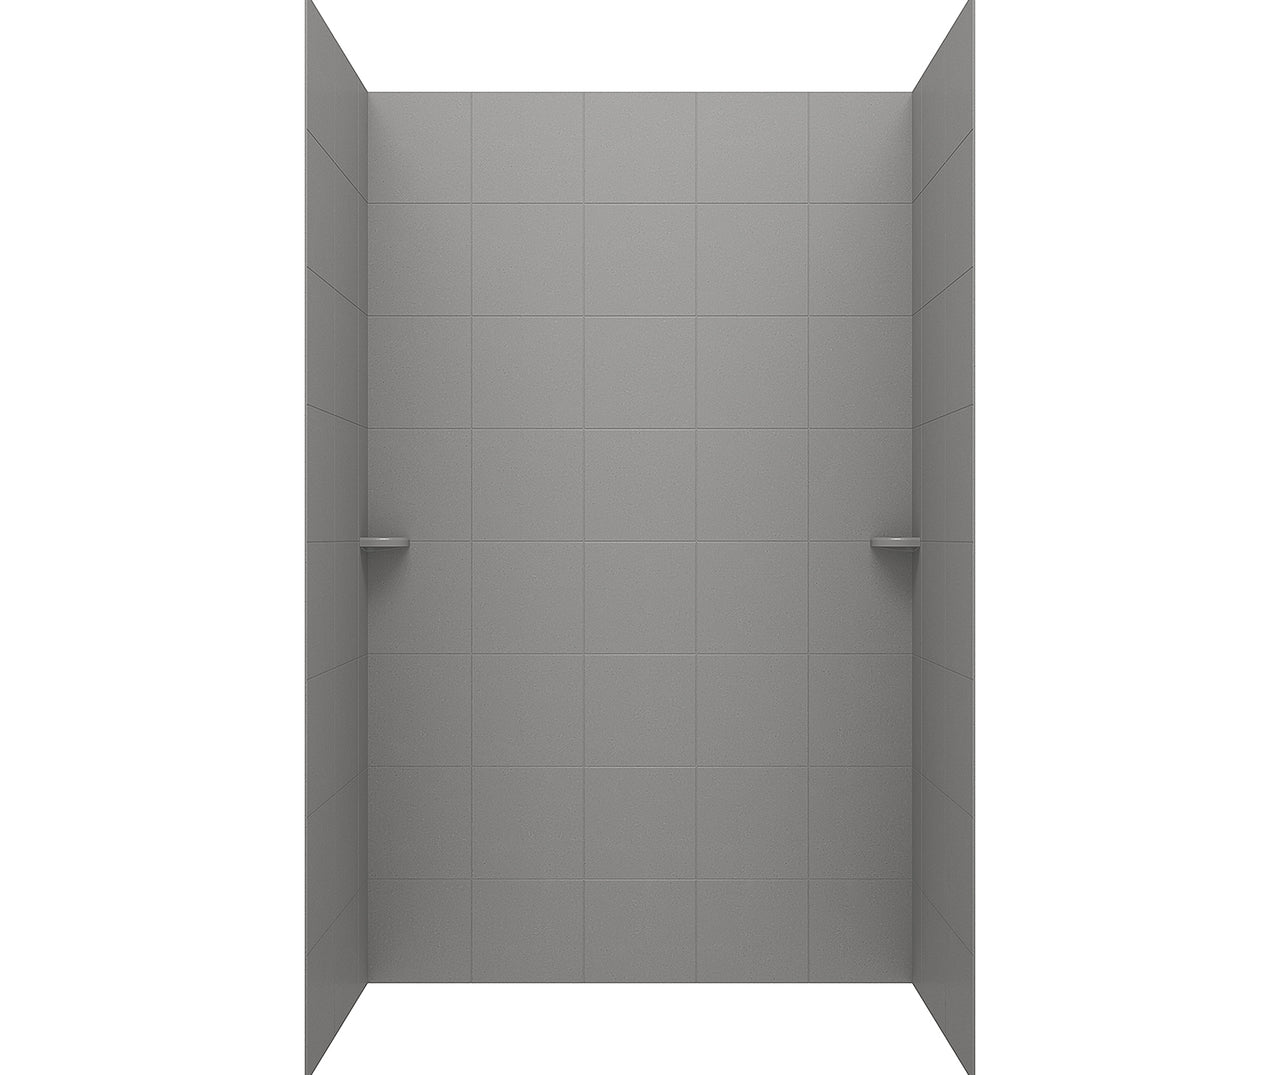 SQMK72-3636 36 x 36 x 72 Swanstone Square Tile Glue up Tub Wall Kit in Ash Gray